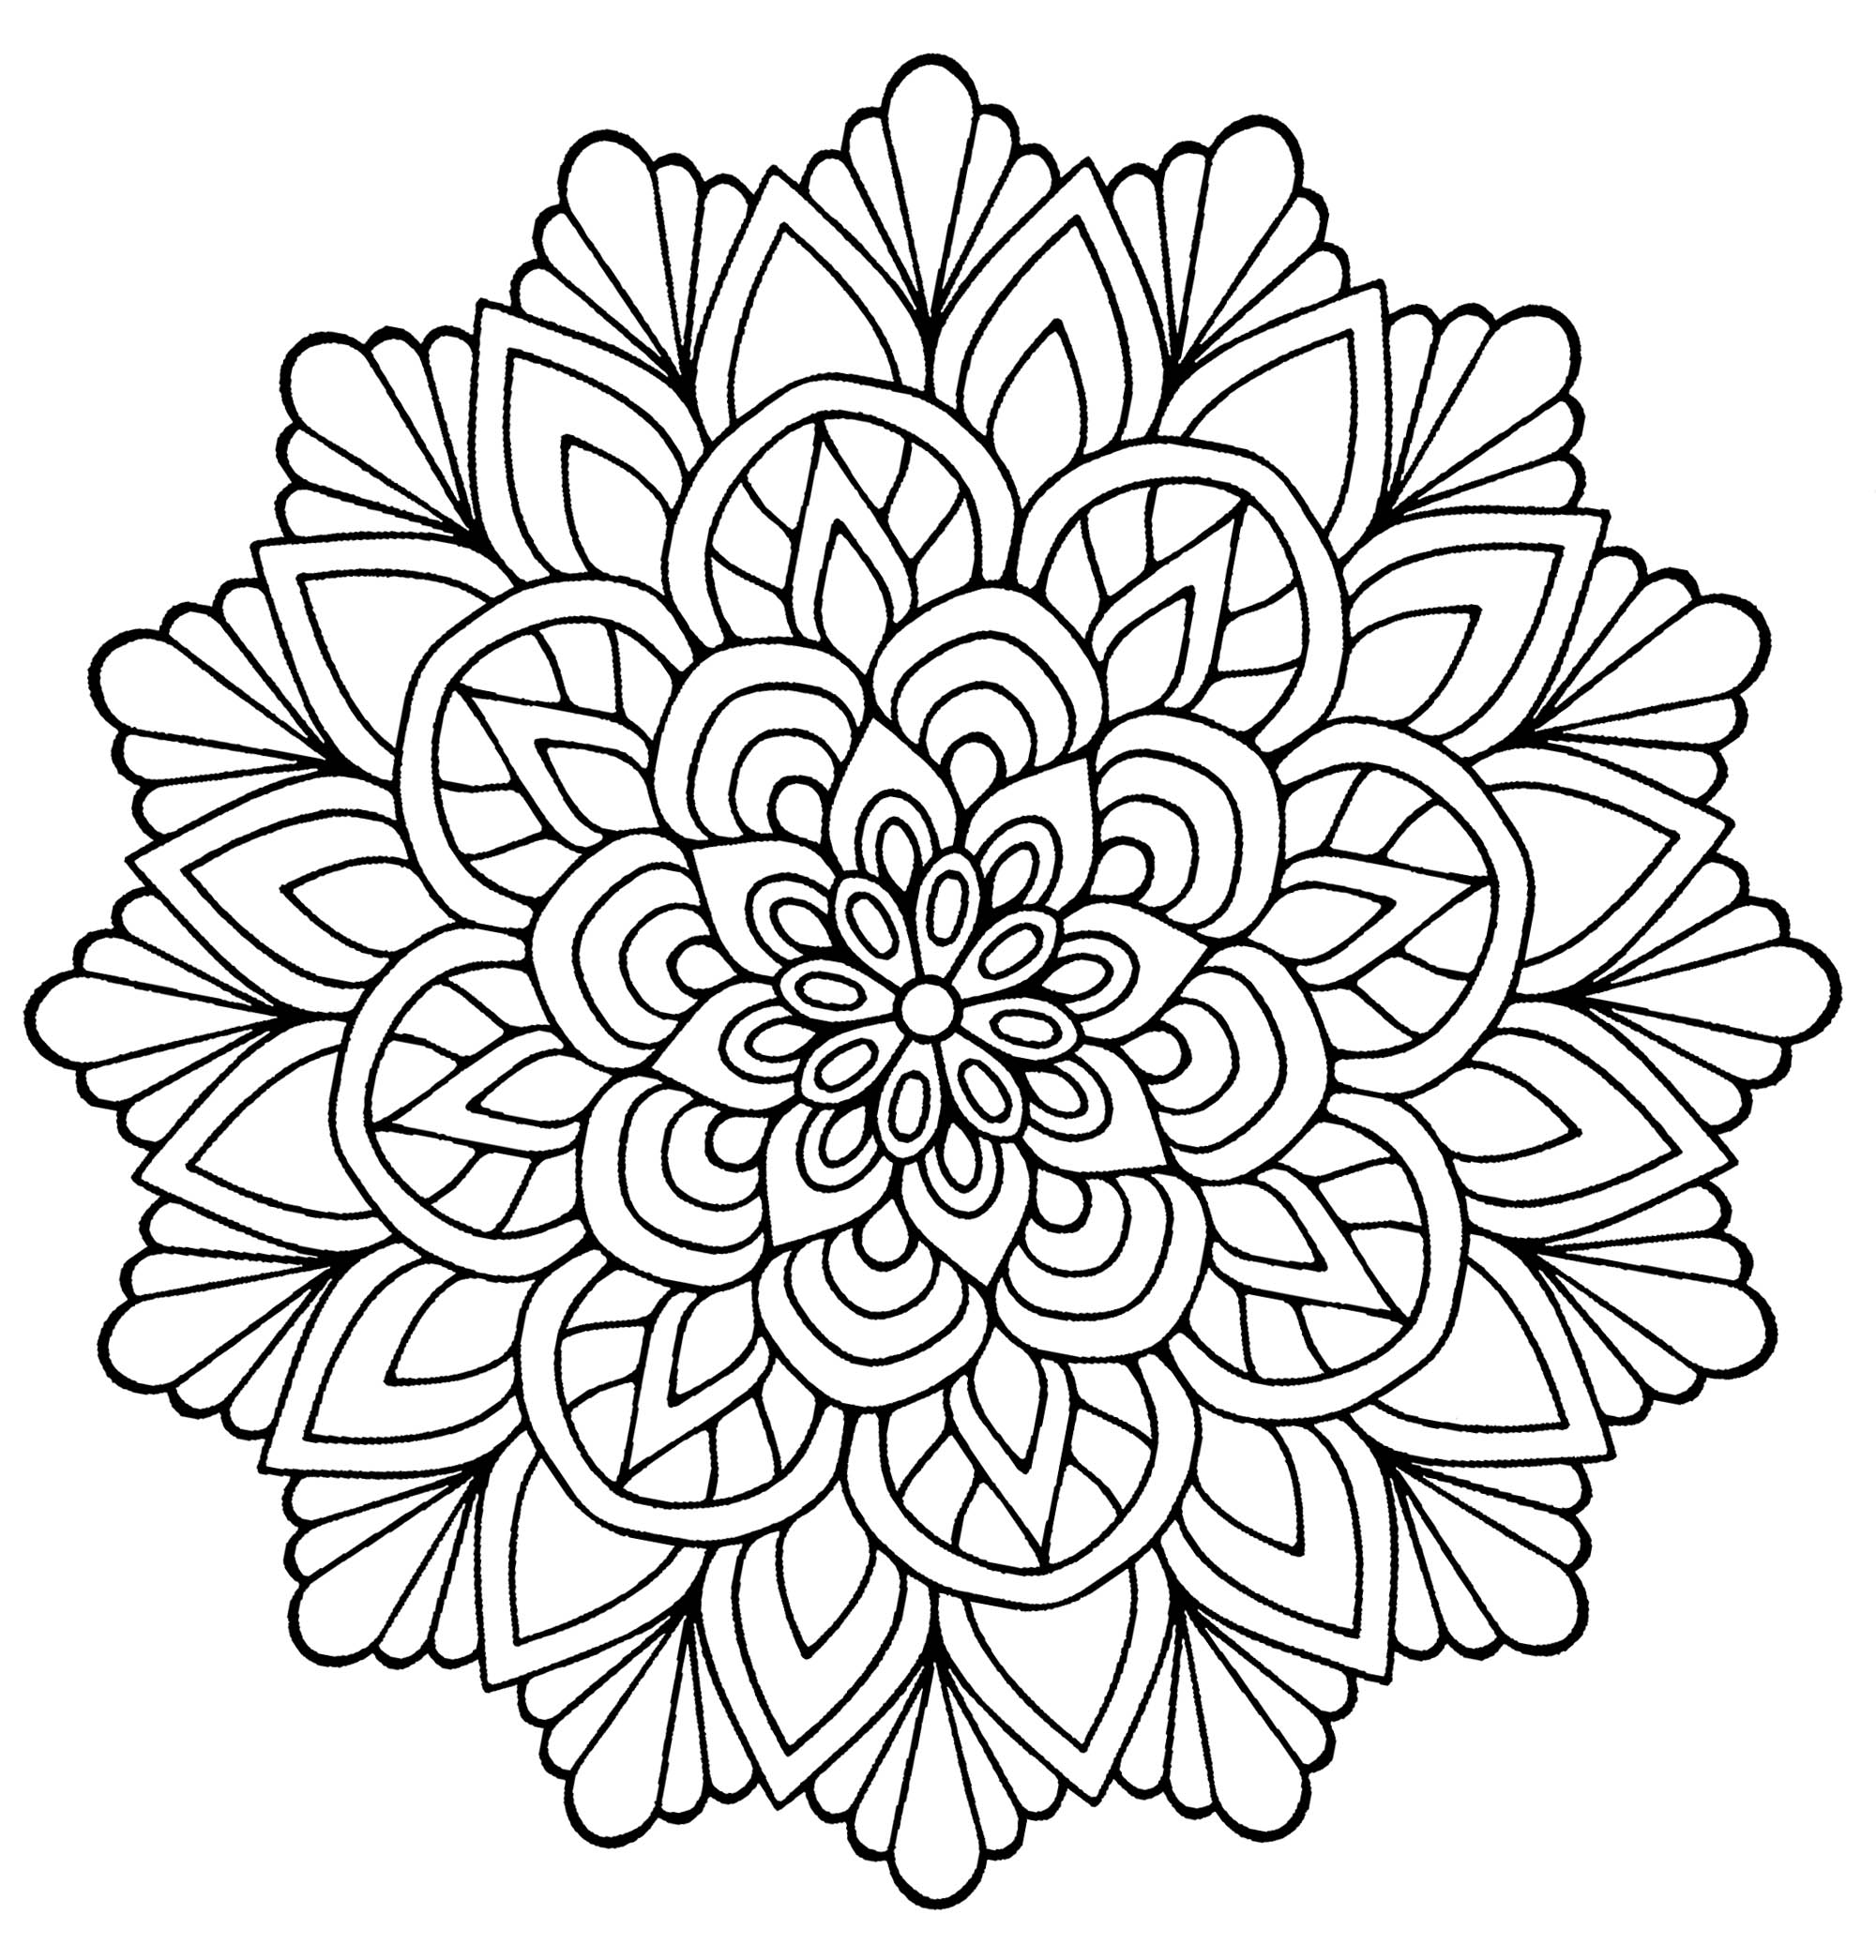 coloriage mandala fleur facile de la catégorie coloriage fleur